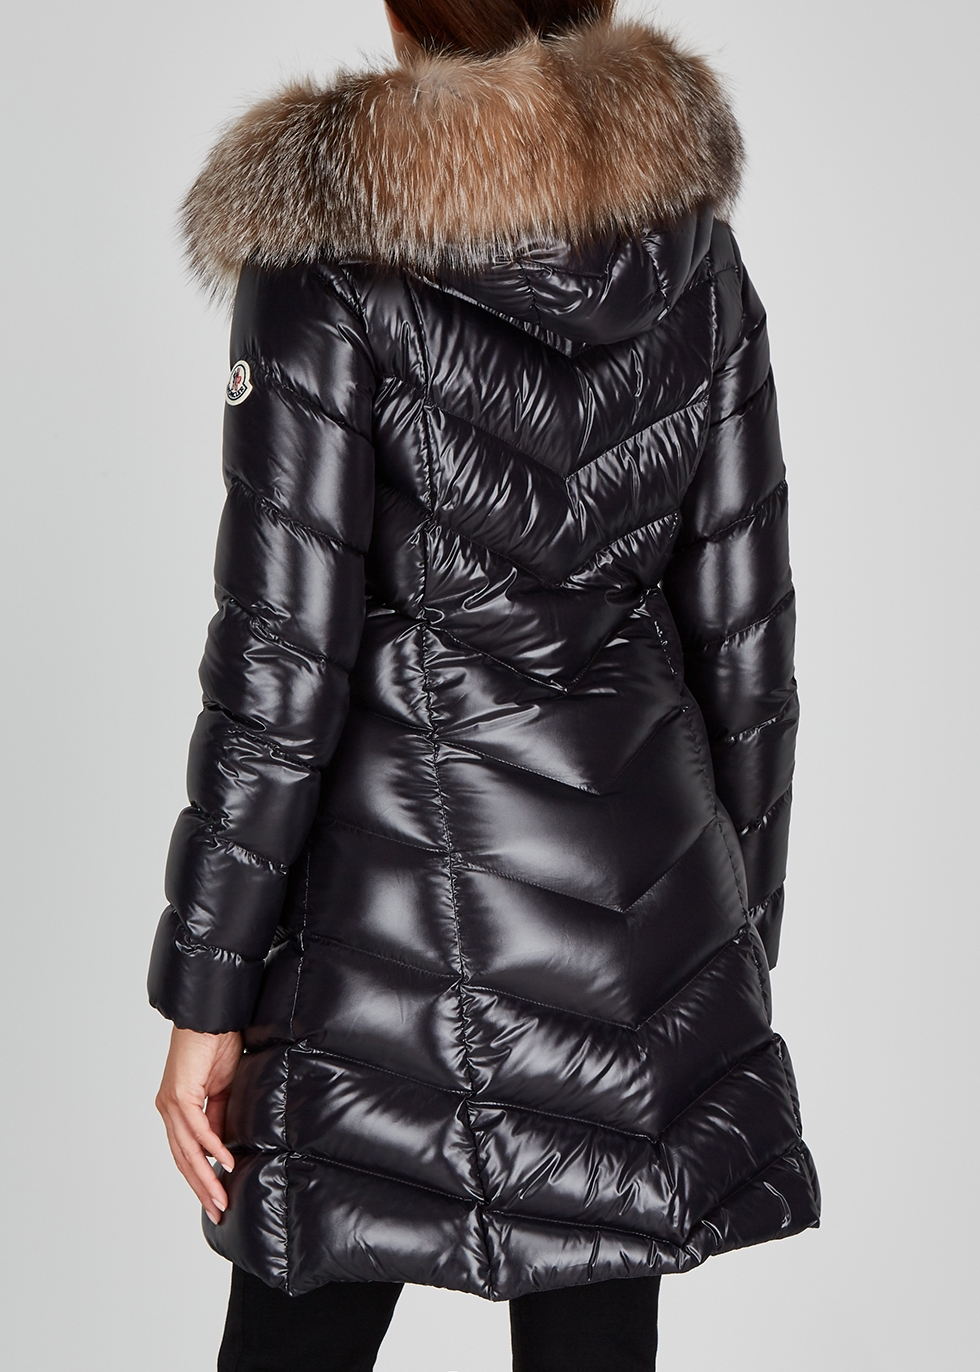 moncler black fur coat